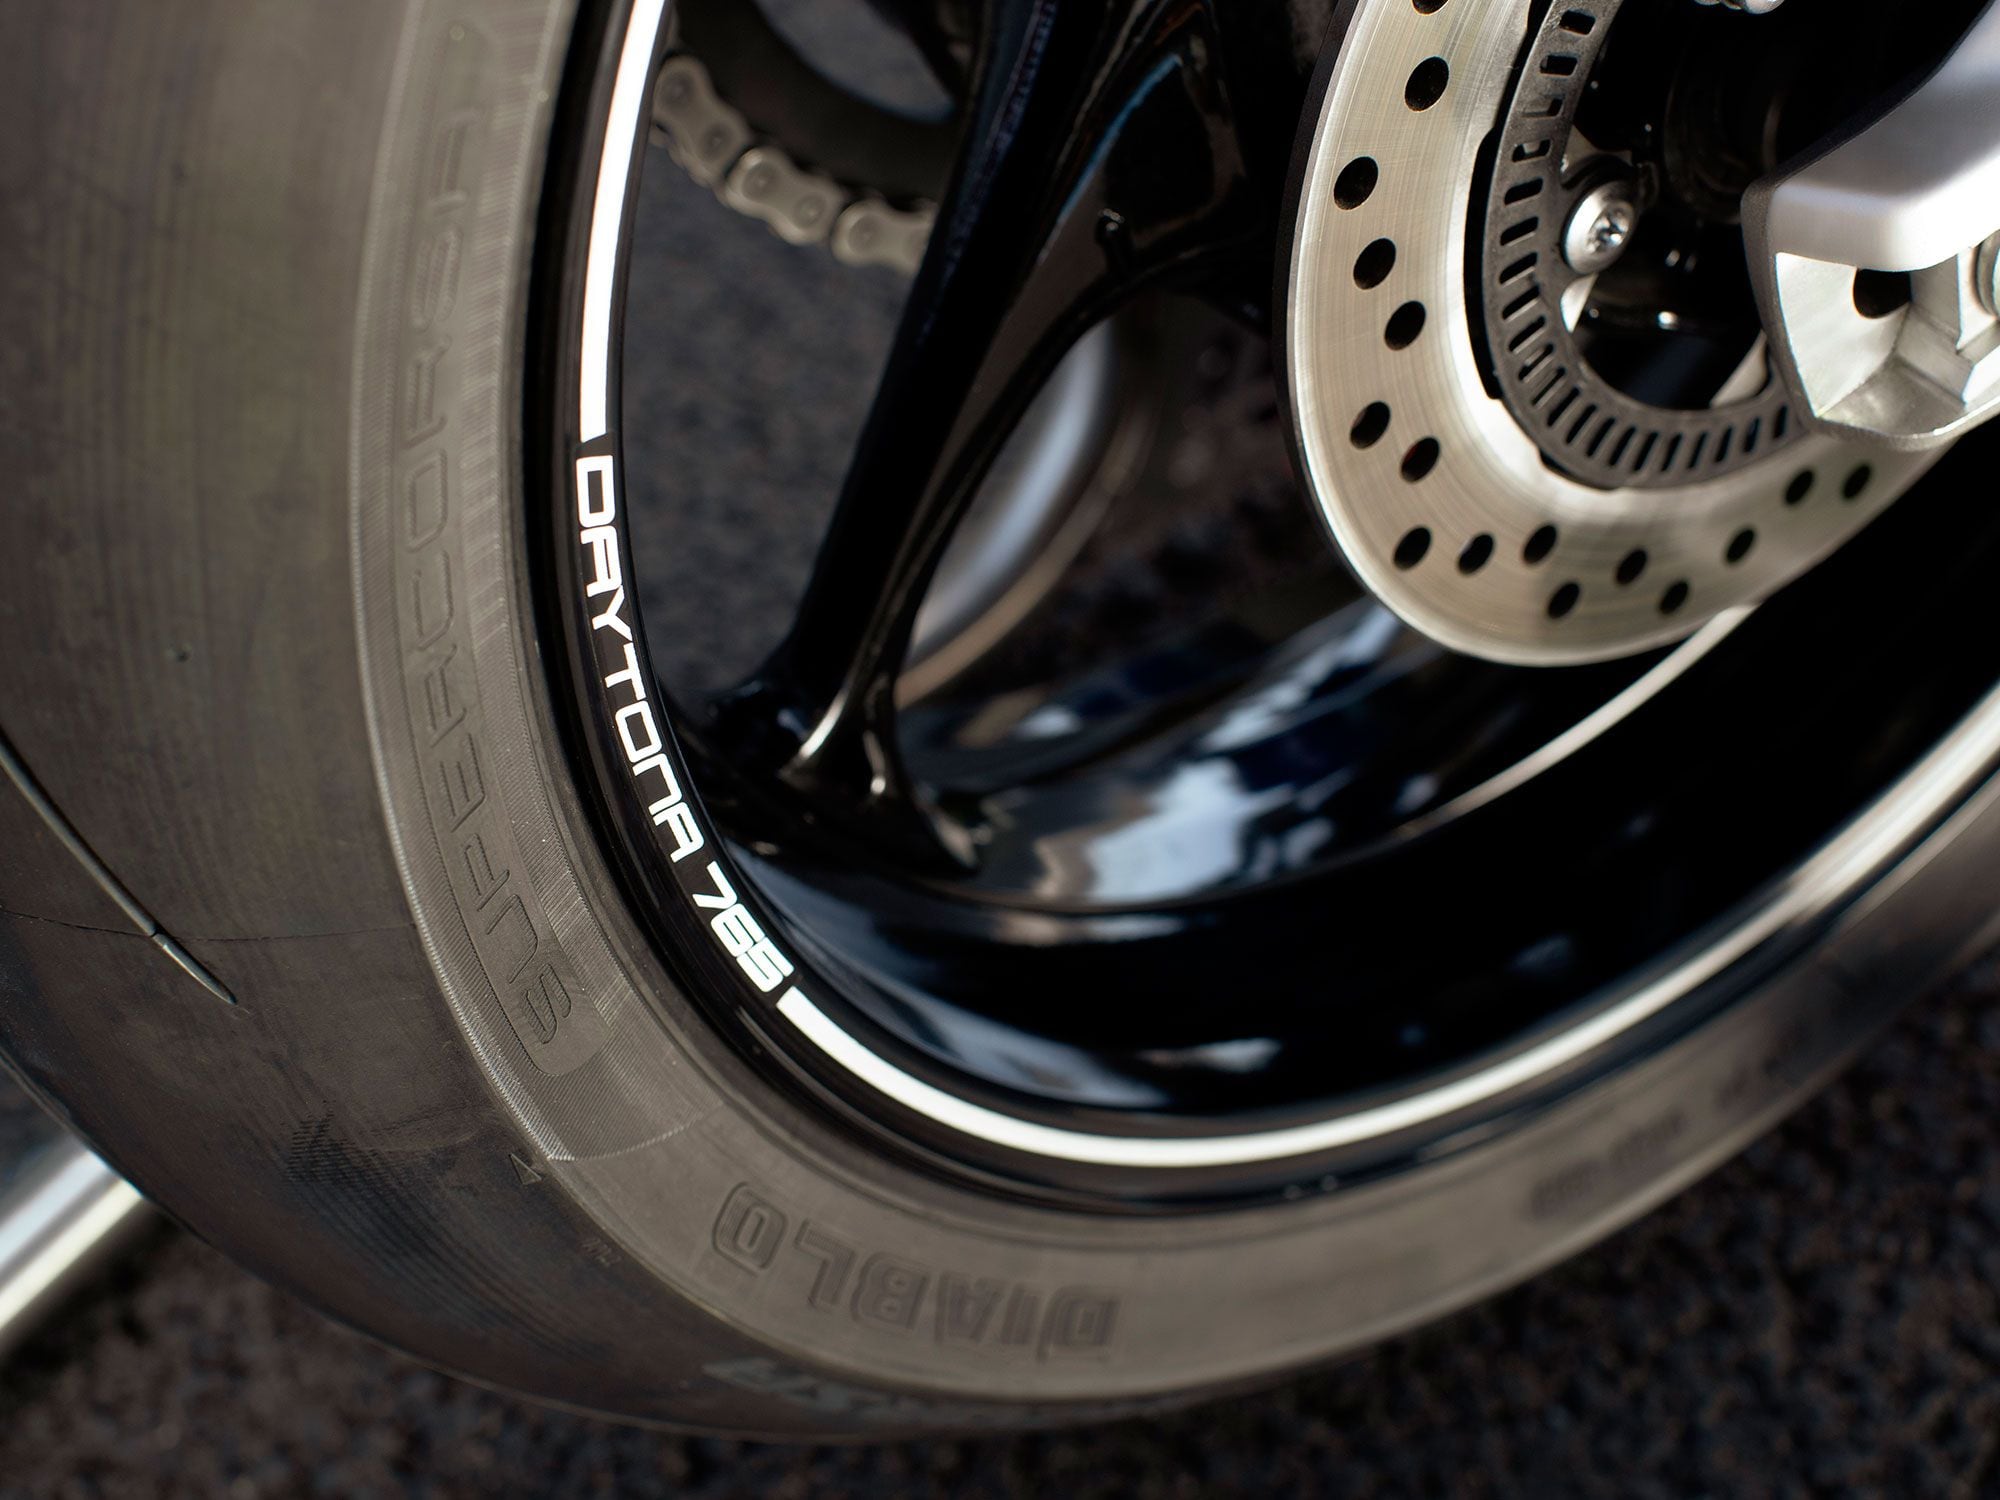 The Daytona 765 rolls on Pirelli’s fantastic Diablo Supercorsa V3 high-performance street and trackday rubber.